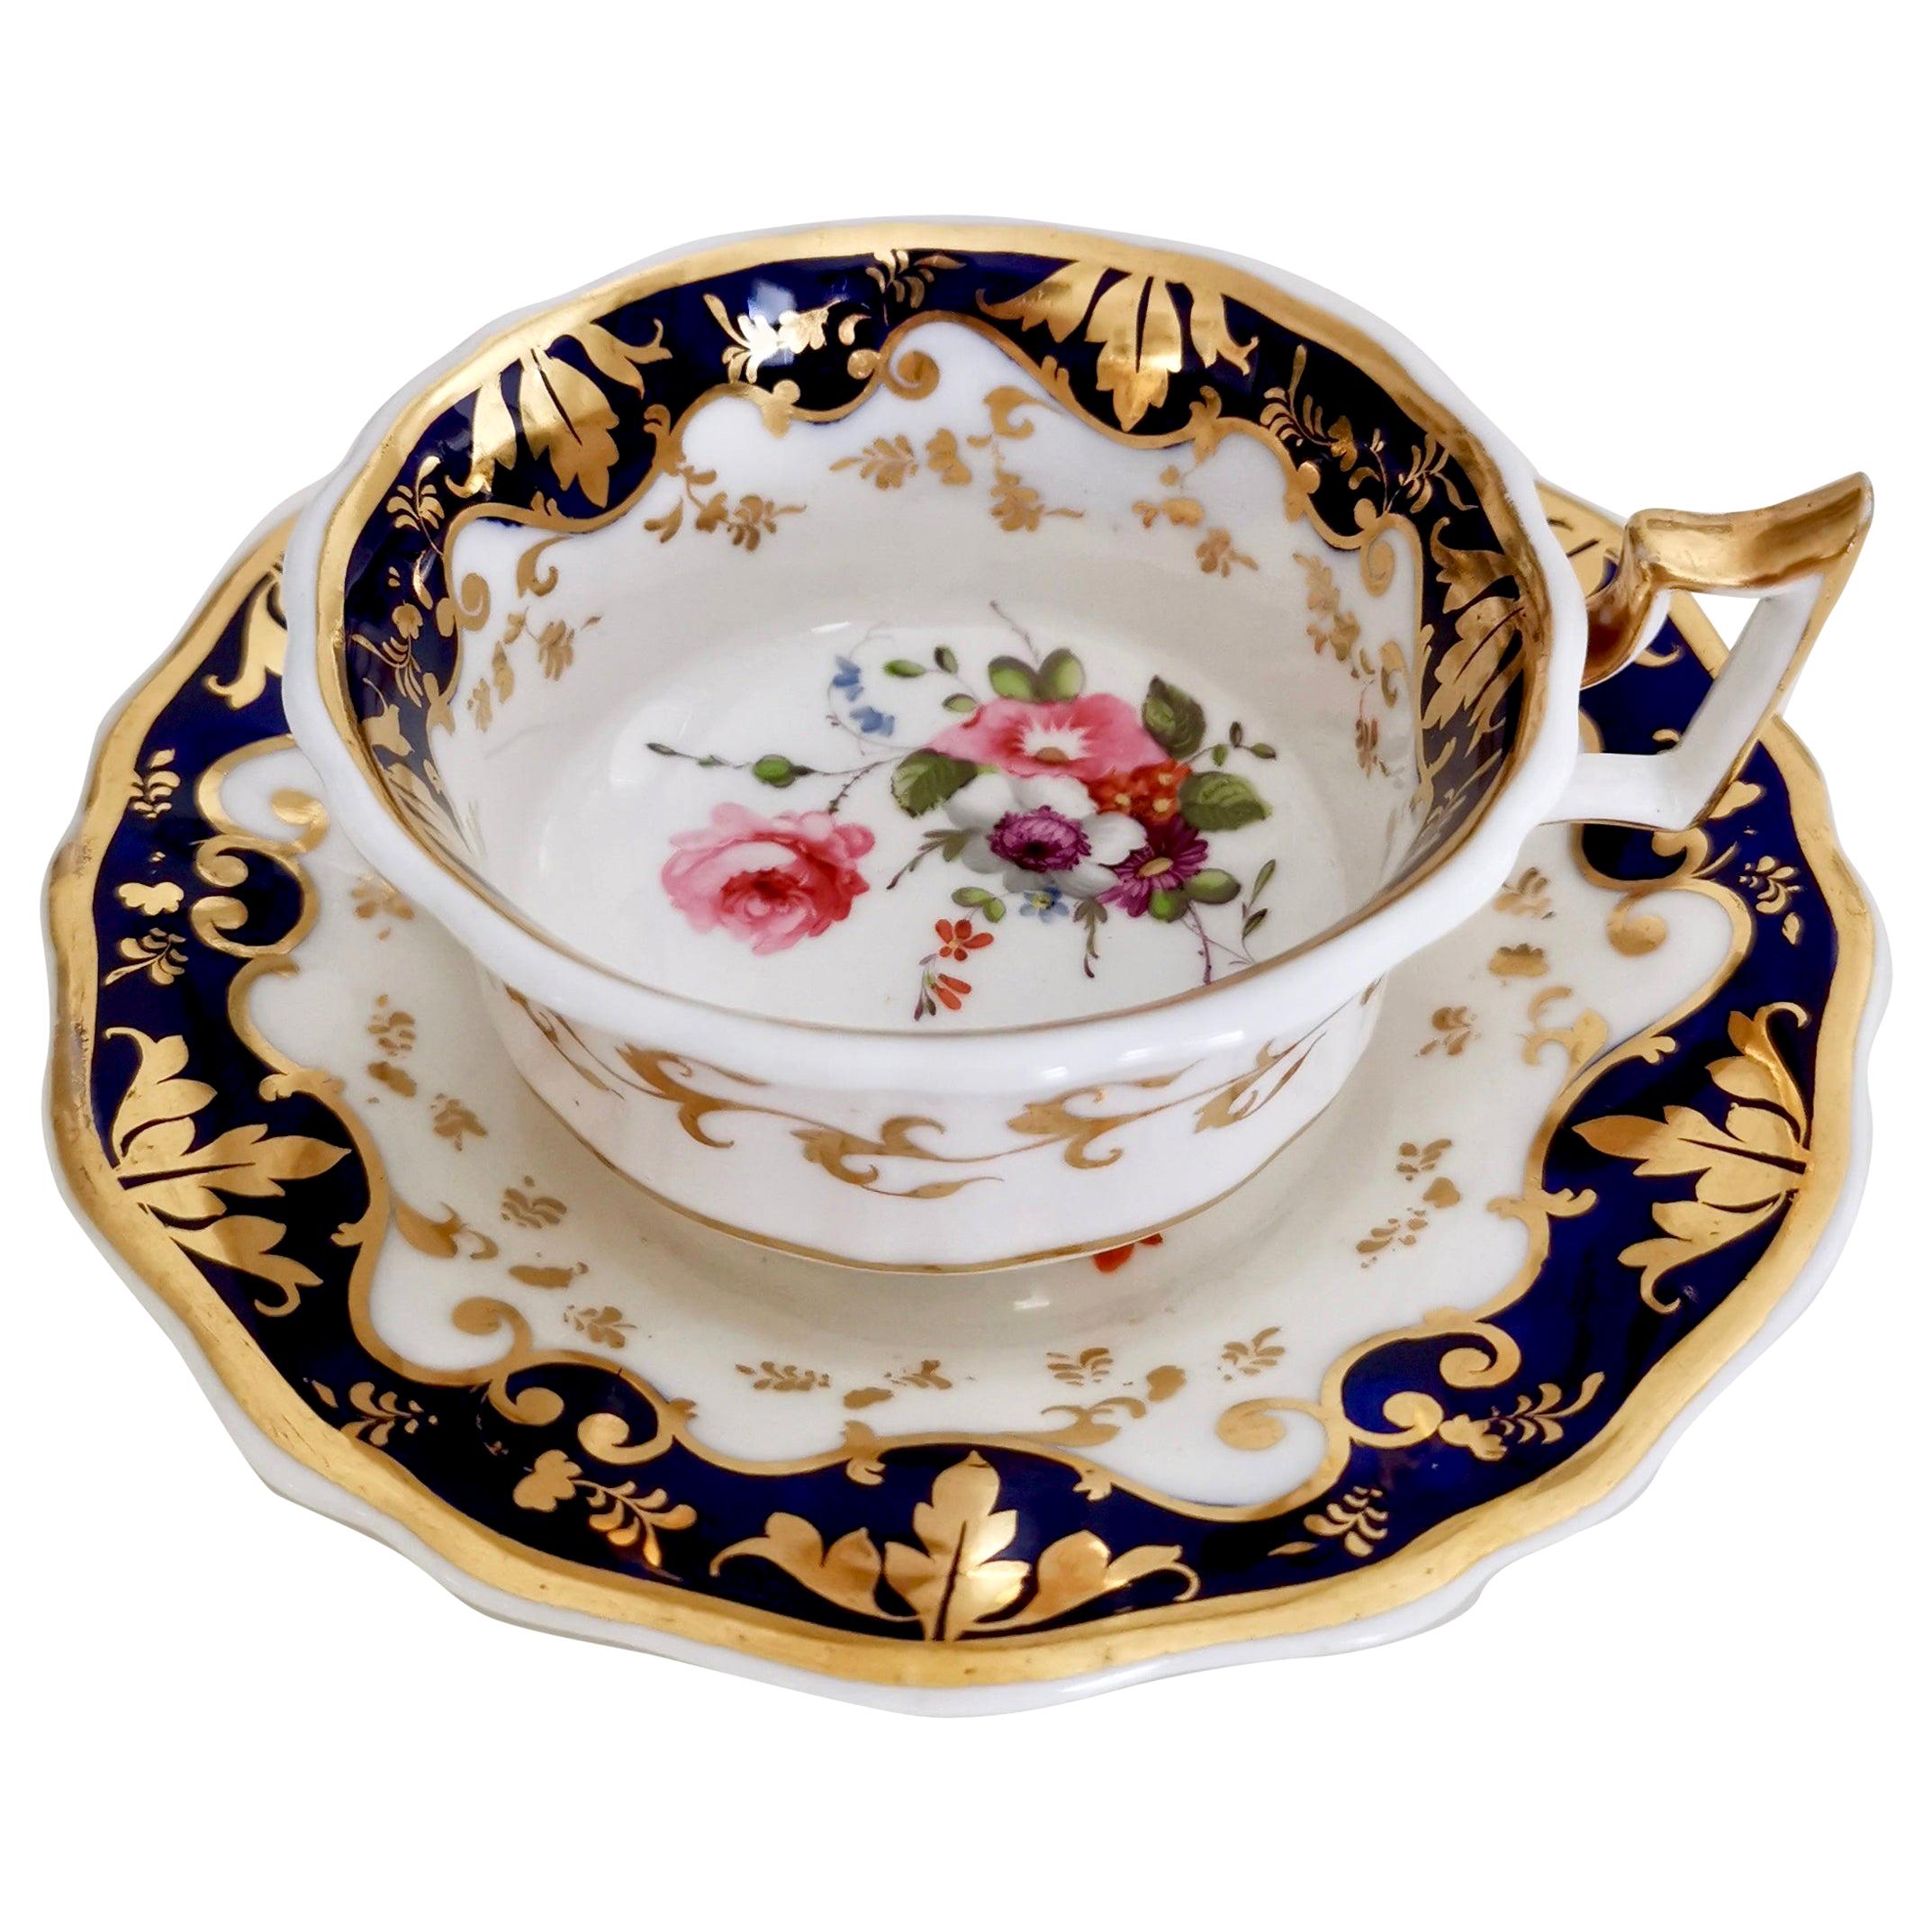 Porcelain Teacup by Ridgway, Gilt, Cobalt Blue and Flowers, Regency, 1820-1825